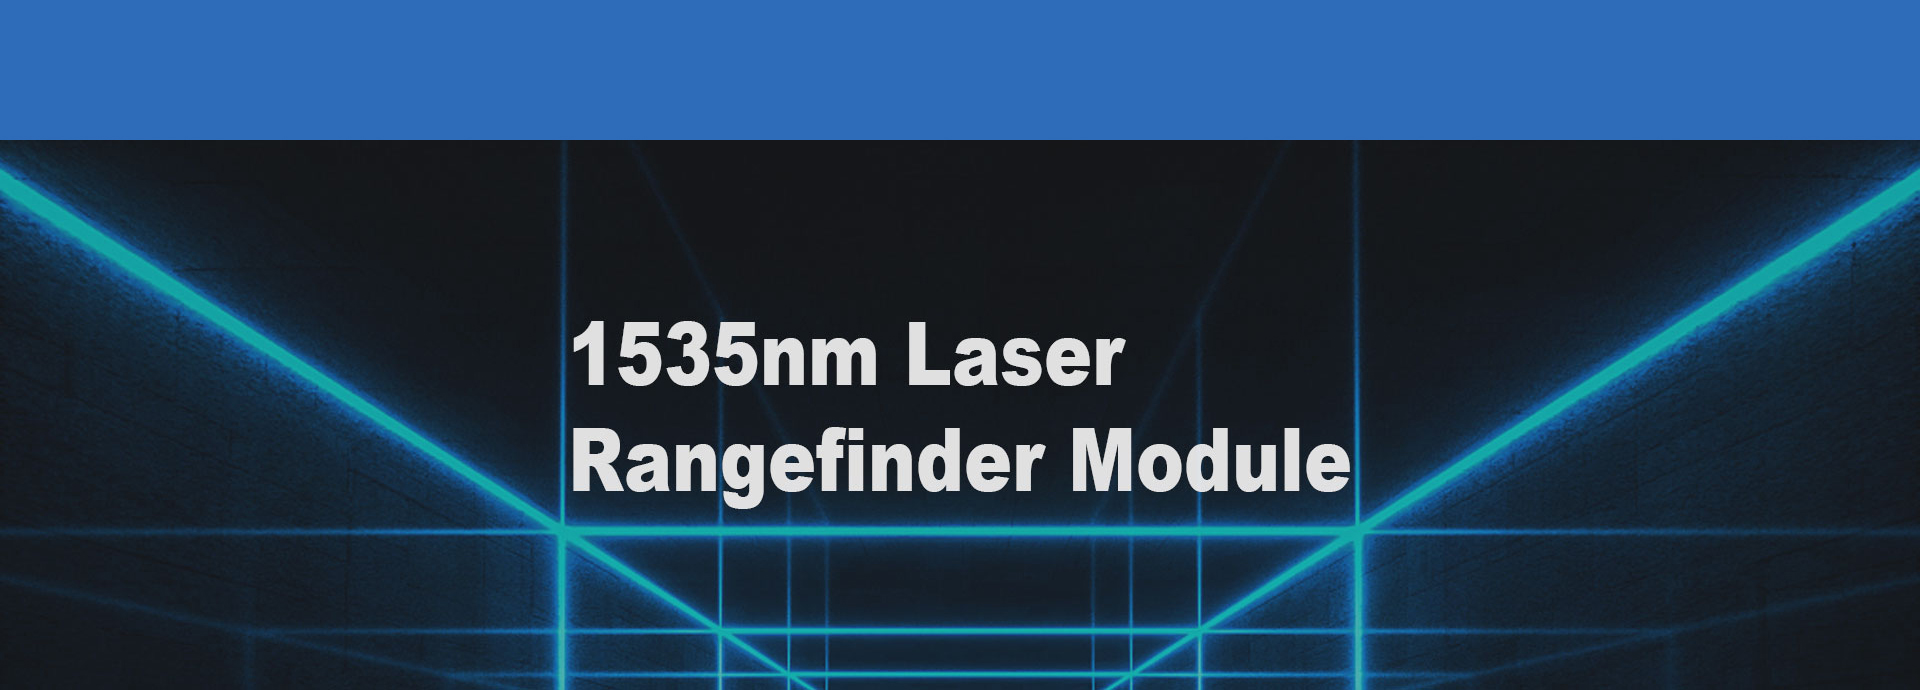 15km Laser Range Finder Module